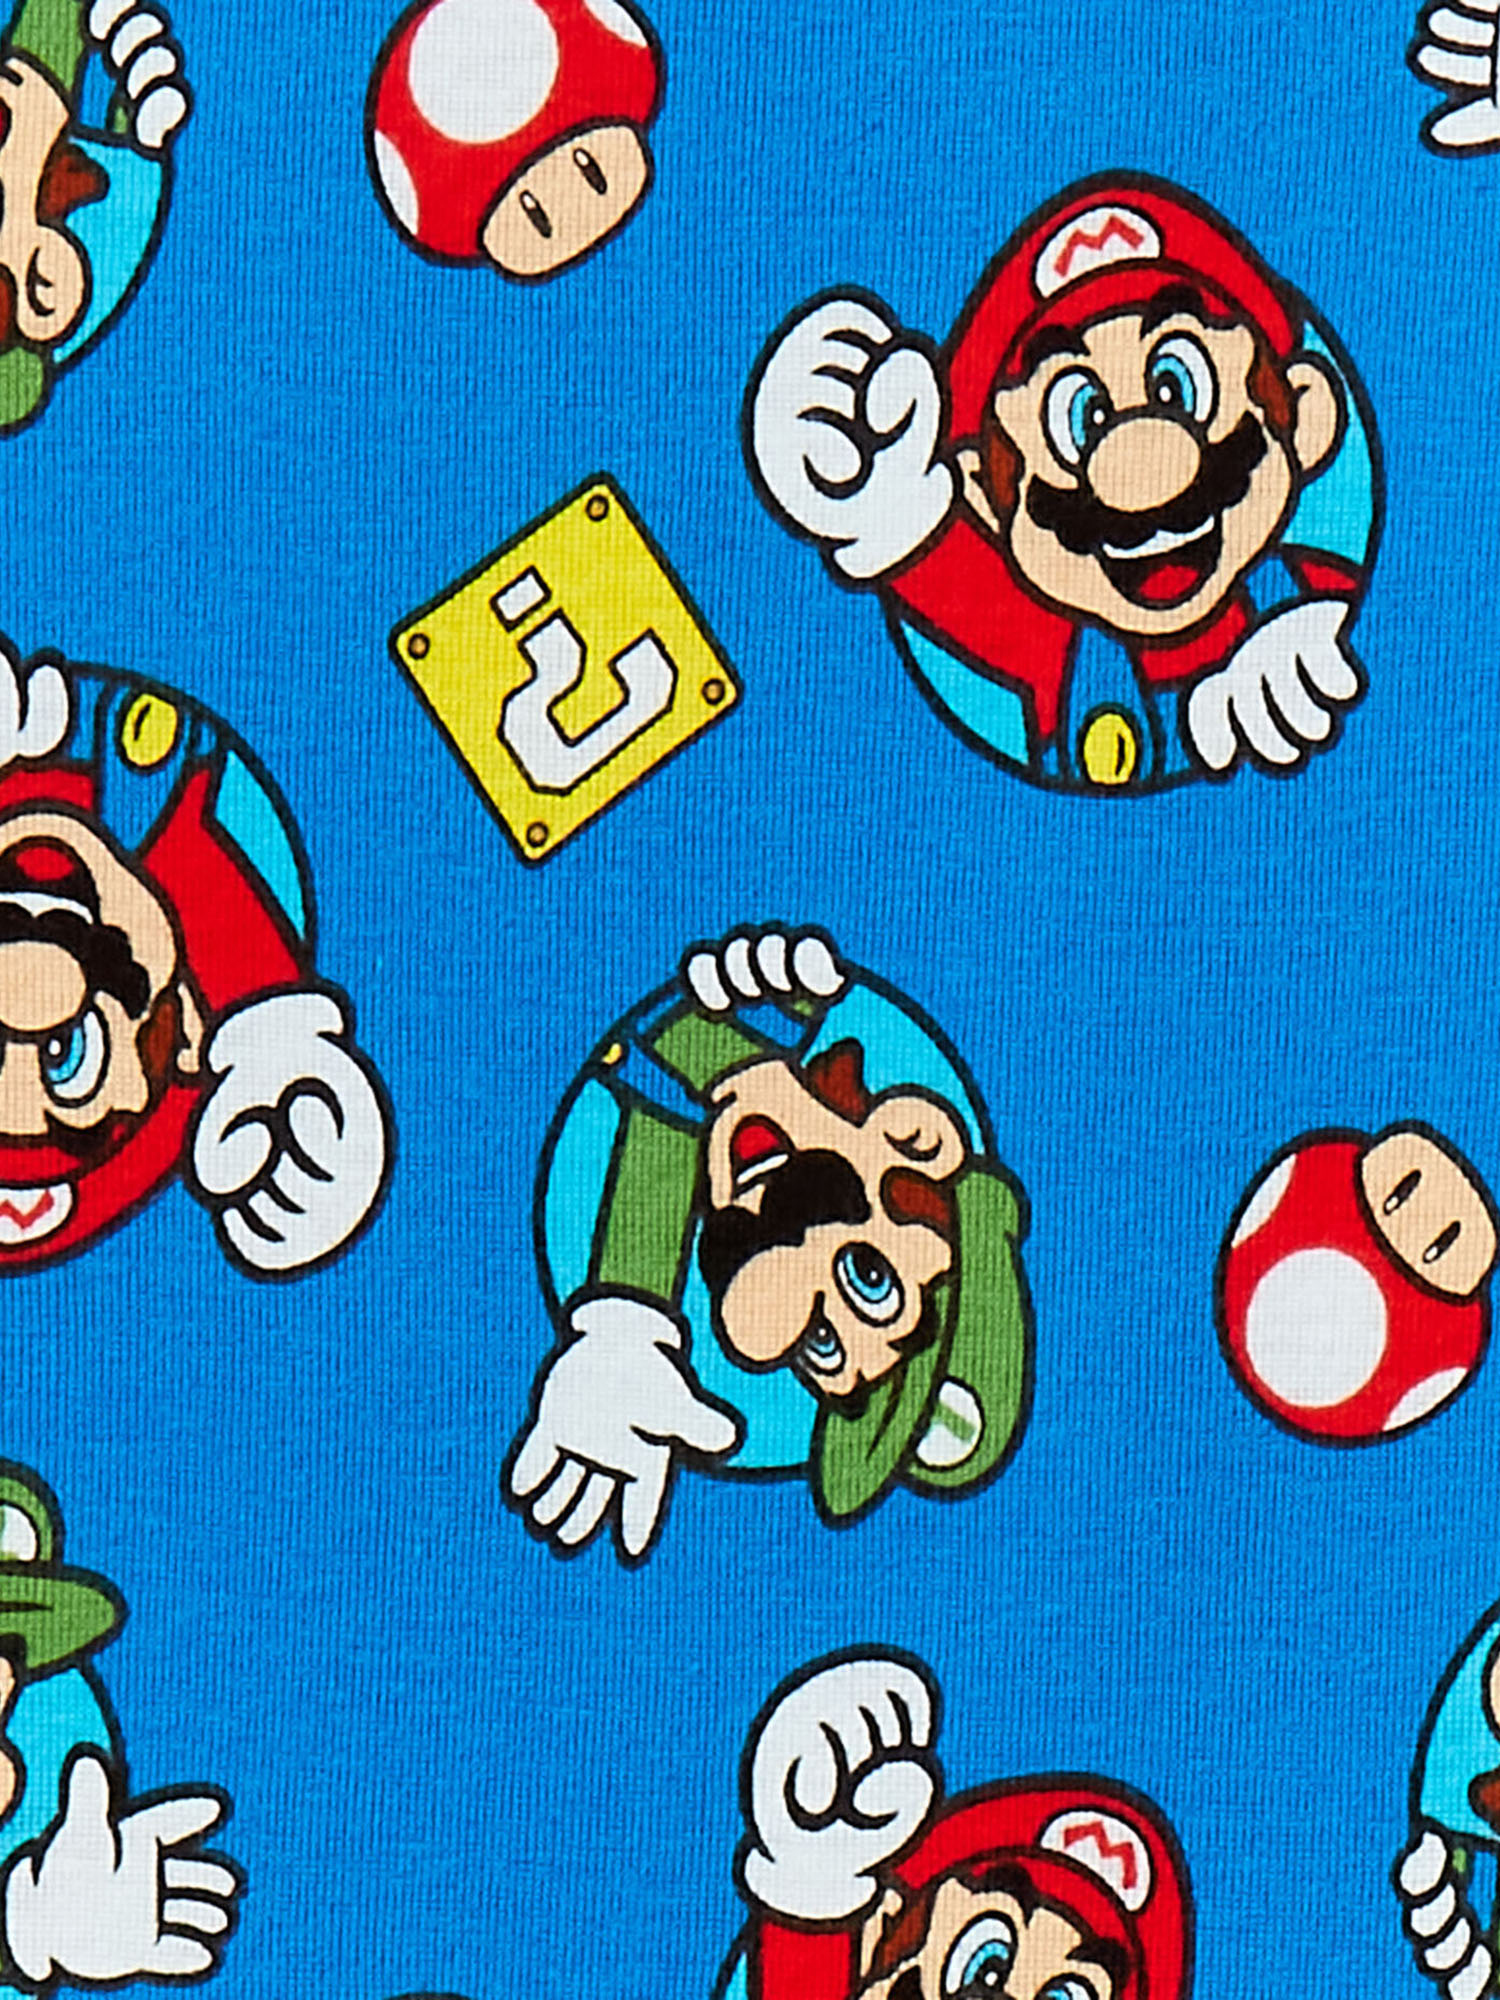 Super Mario Bros. Short Sleeve Crew Neck Graphic Prints Pajamas (Big Boys) 4 Piece Set - image 3 of 3